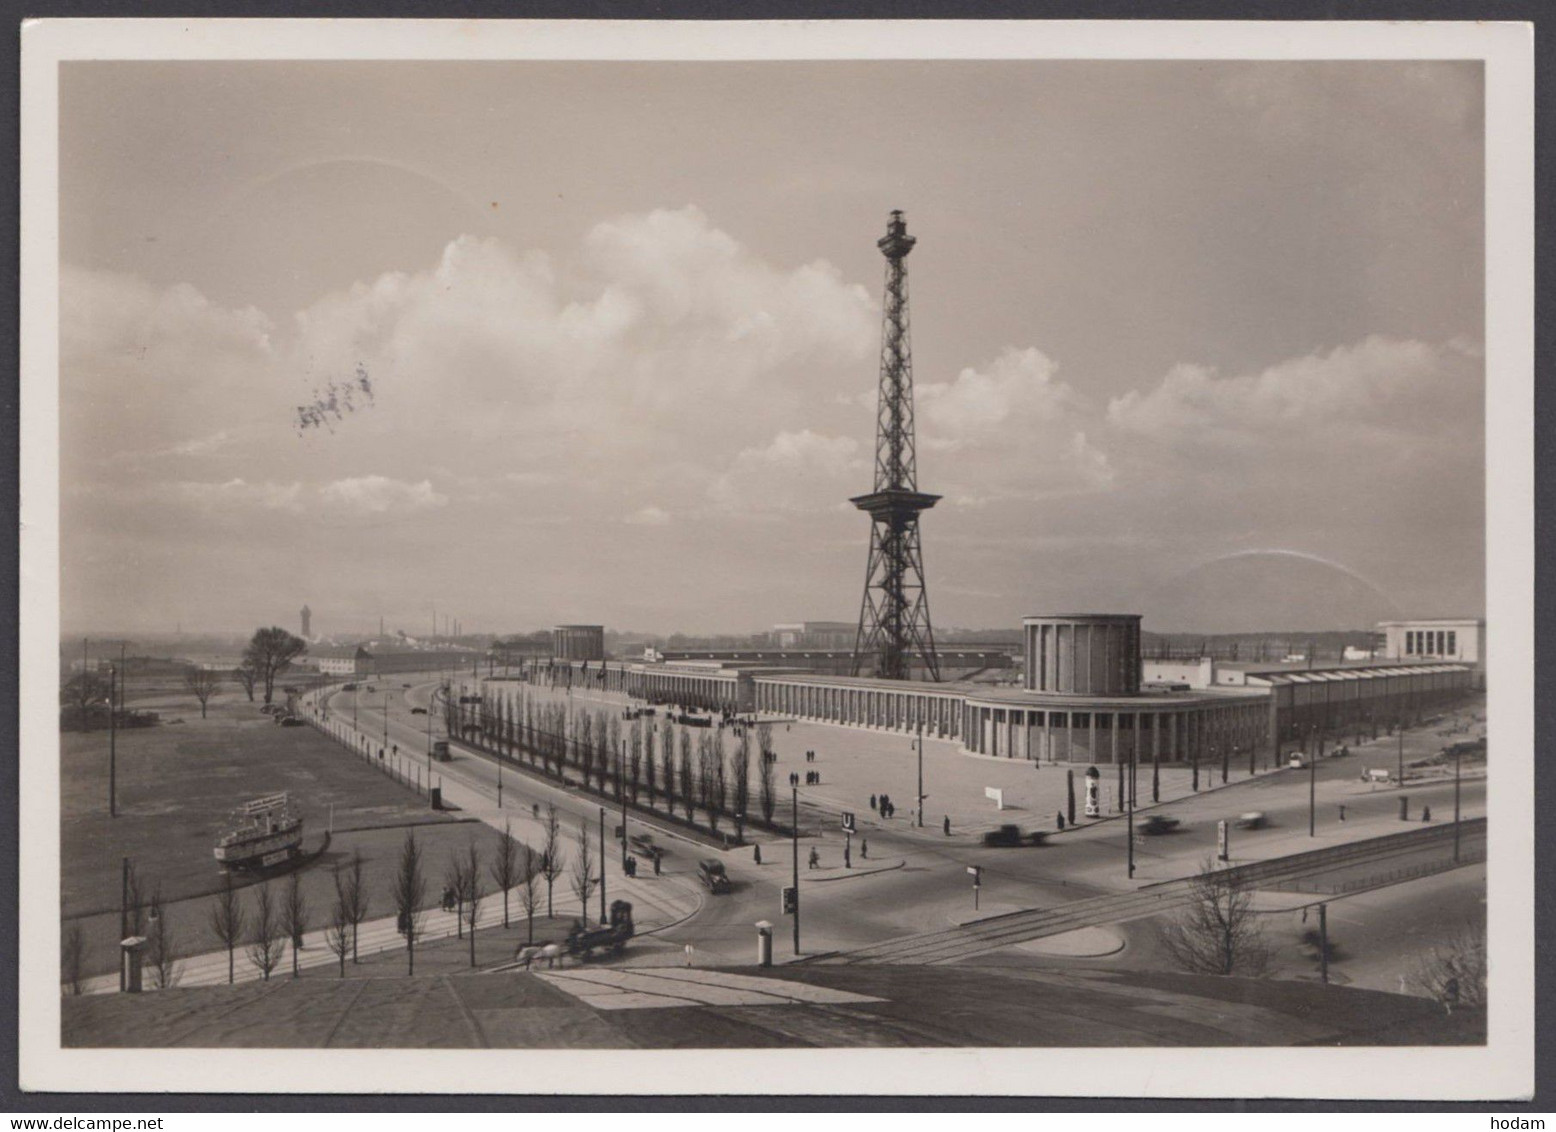 "Berlin", Ausstellungshallen Mit Funkturm, 1937, Sst. - Tempelhof